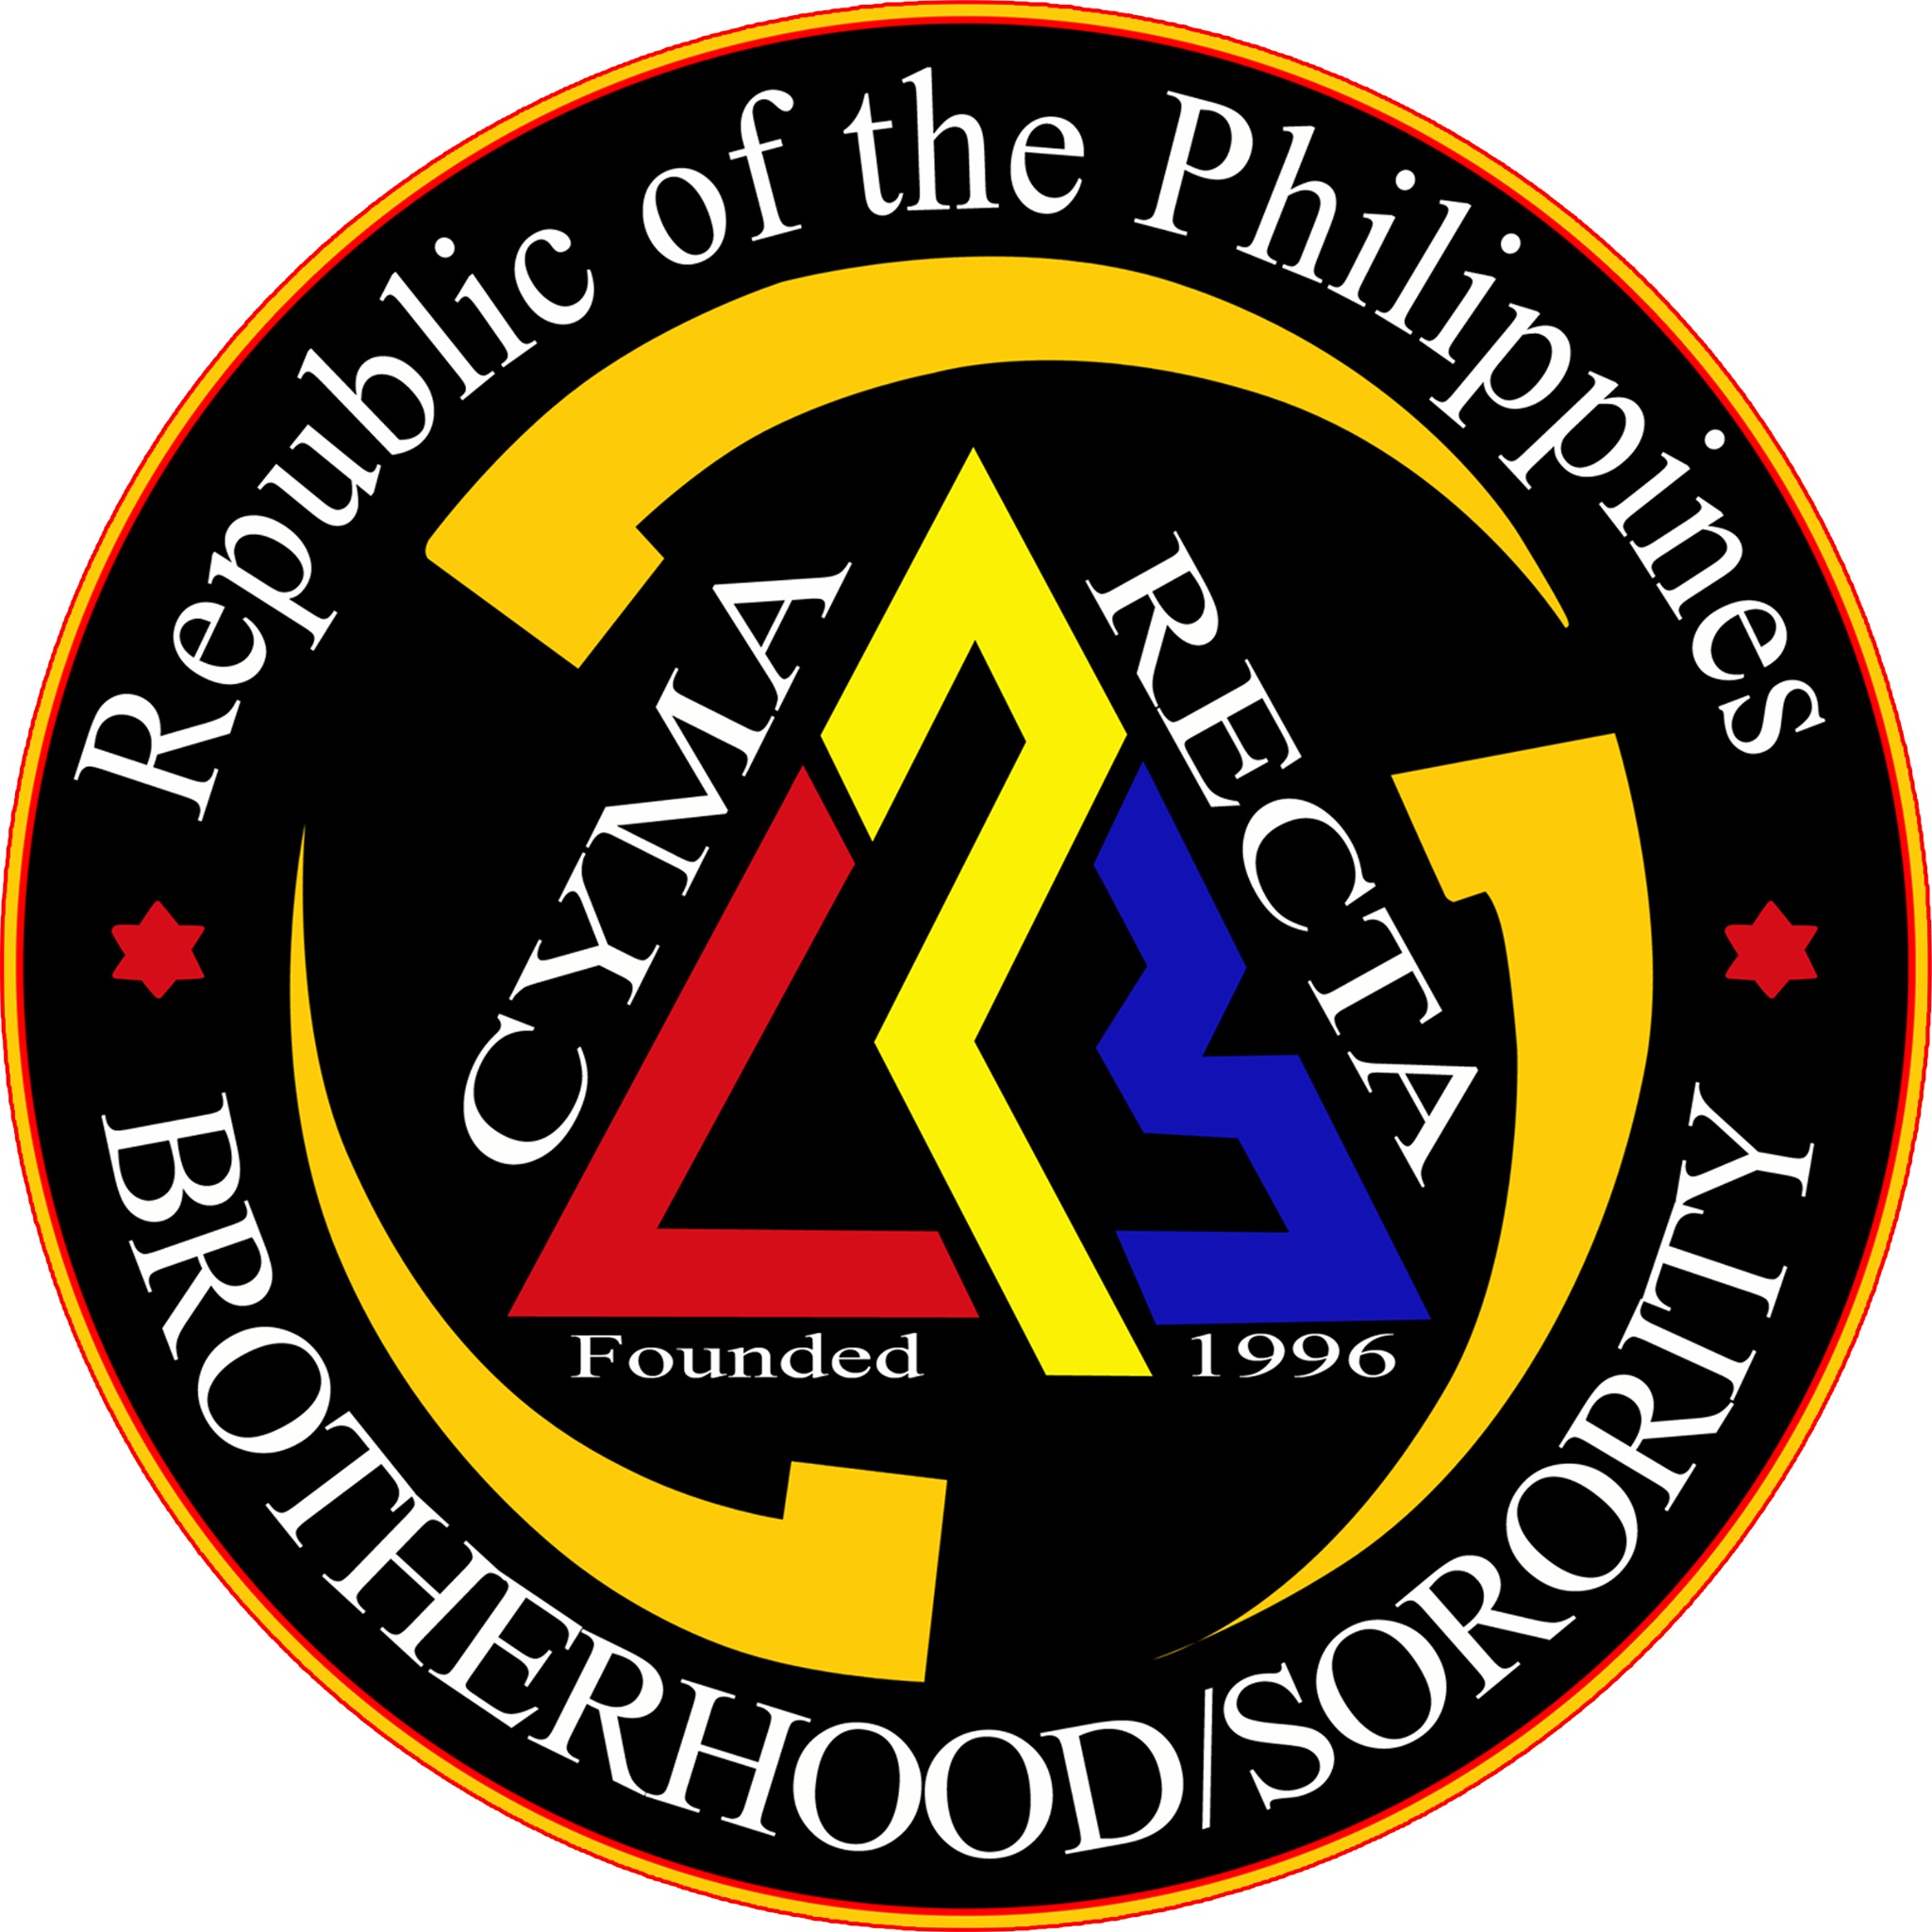 Lutheran Brotherhood Logo PNG Transparent & SVG Vector - Freebie Supply